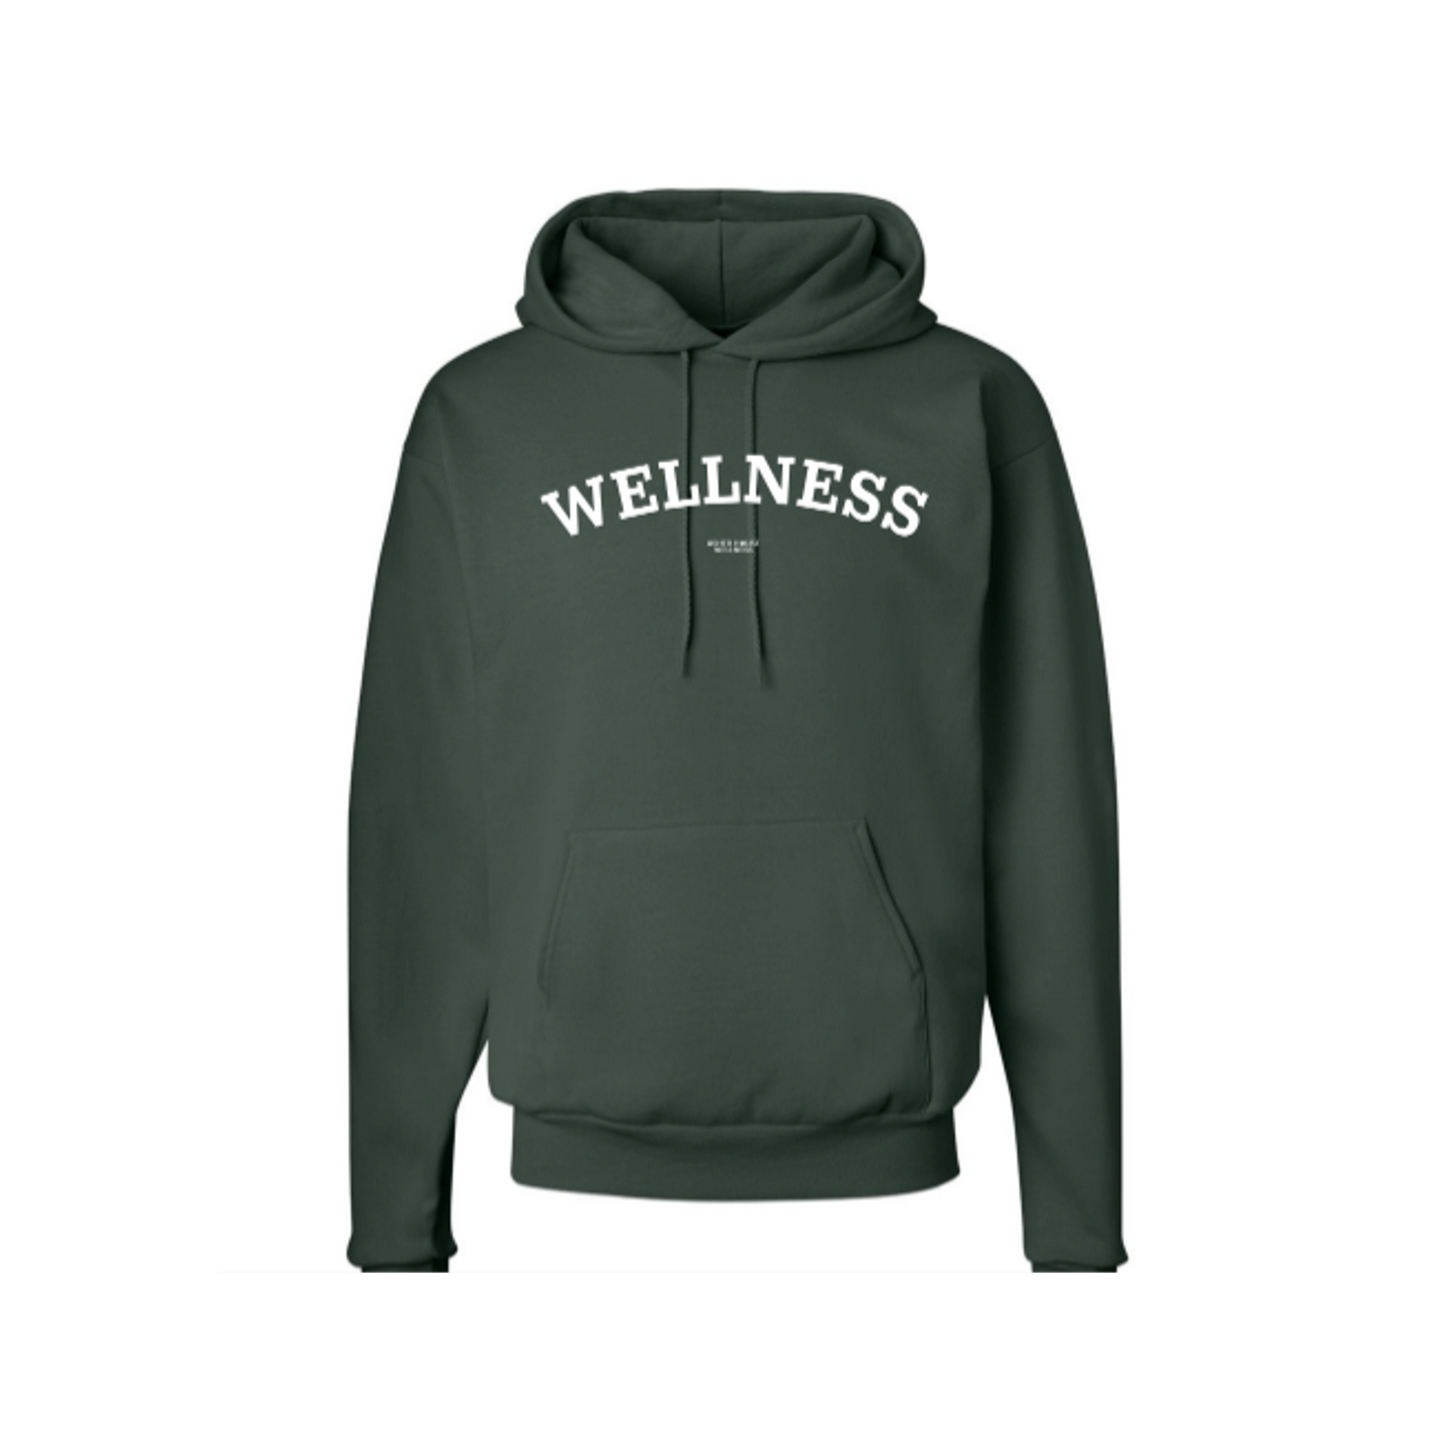 Wellness Hooded Sweatshirt - Dark Green